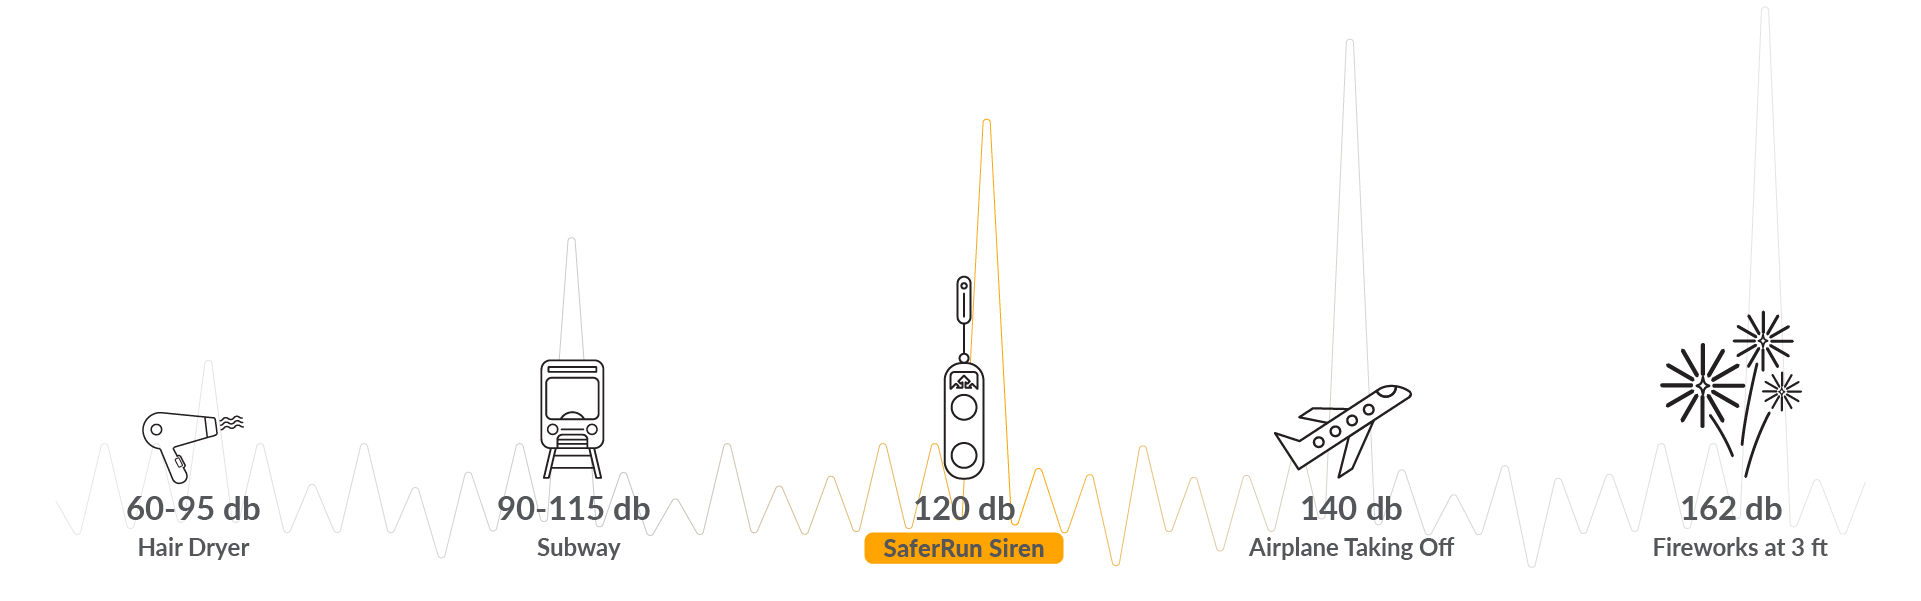 Spectrum of Loudness per Decibel featuring the SaferRun Personal SIren